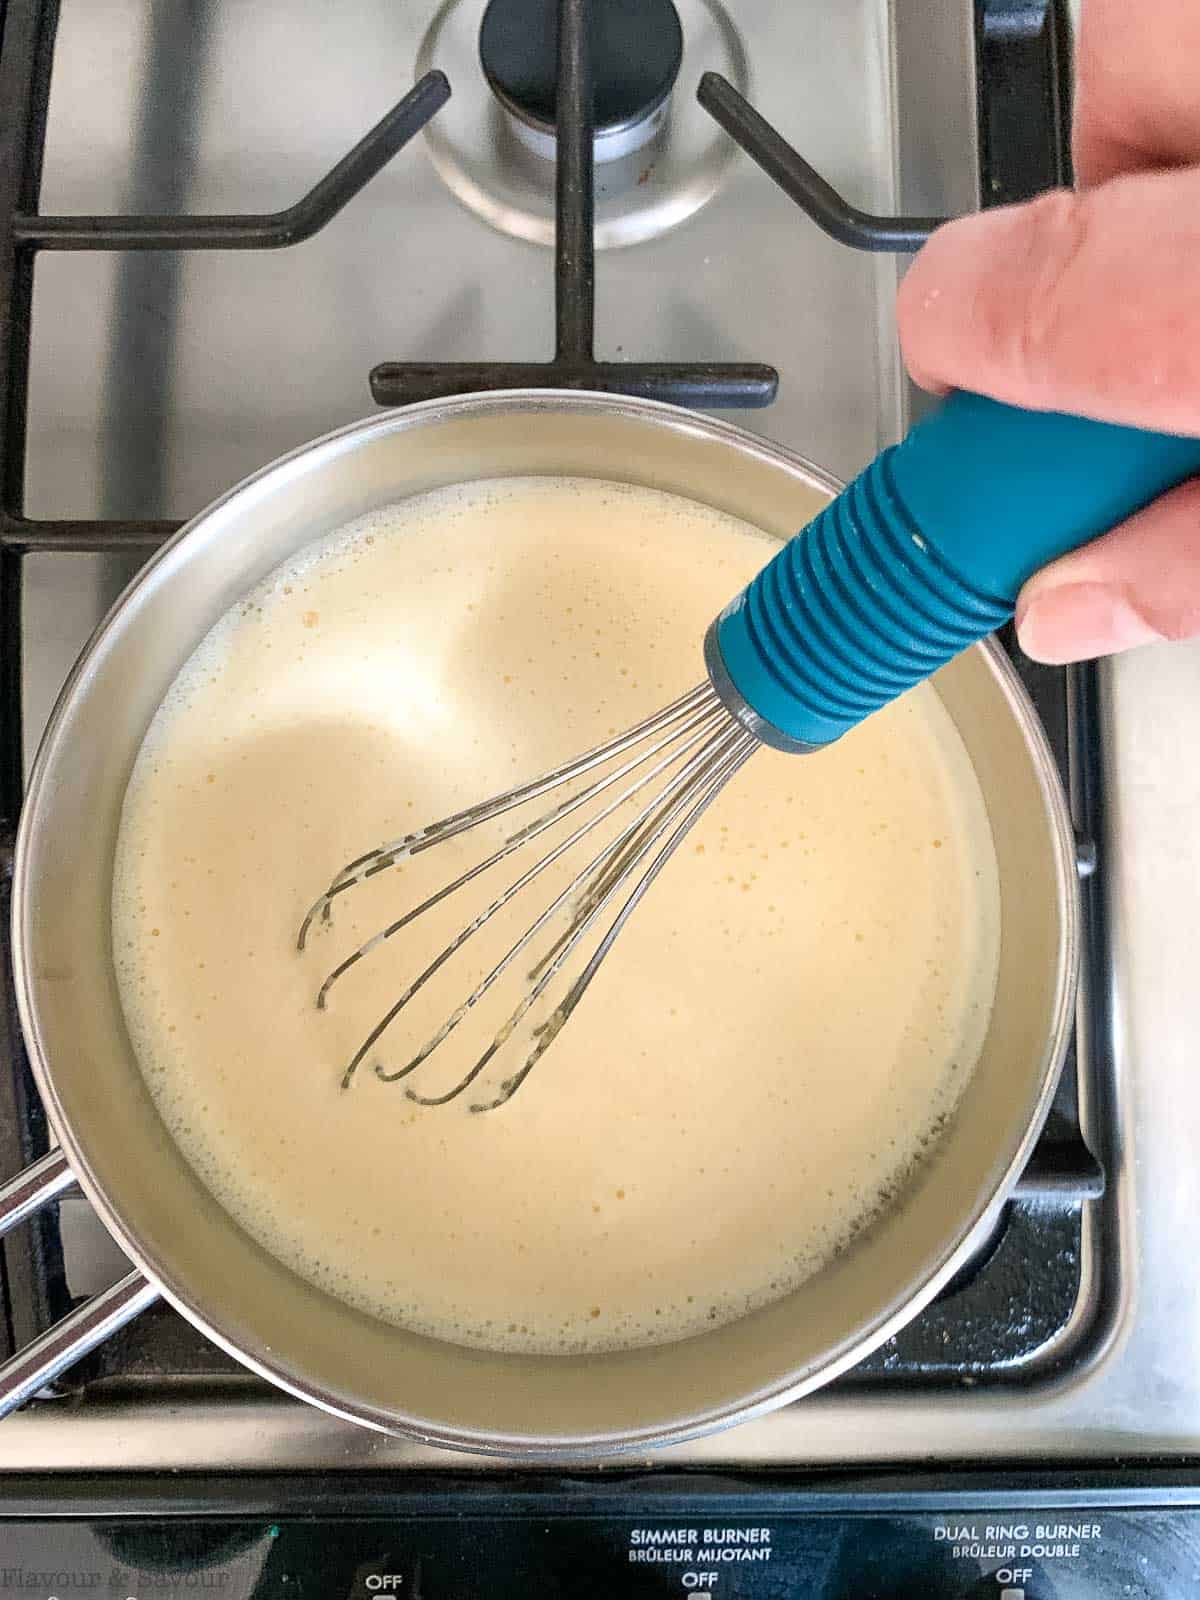 heating milk and vanilla in a saucepan.